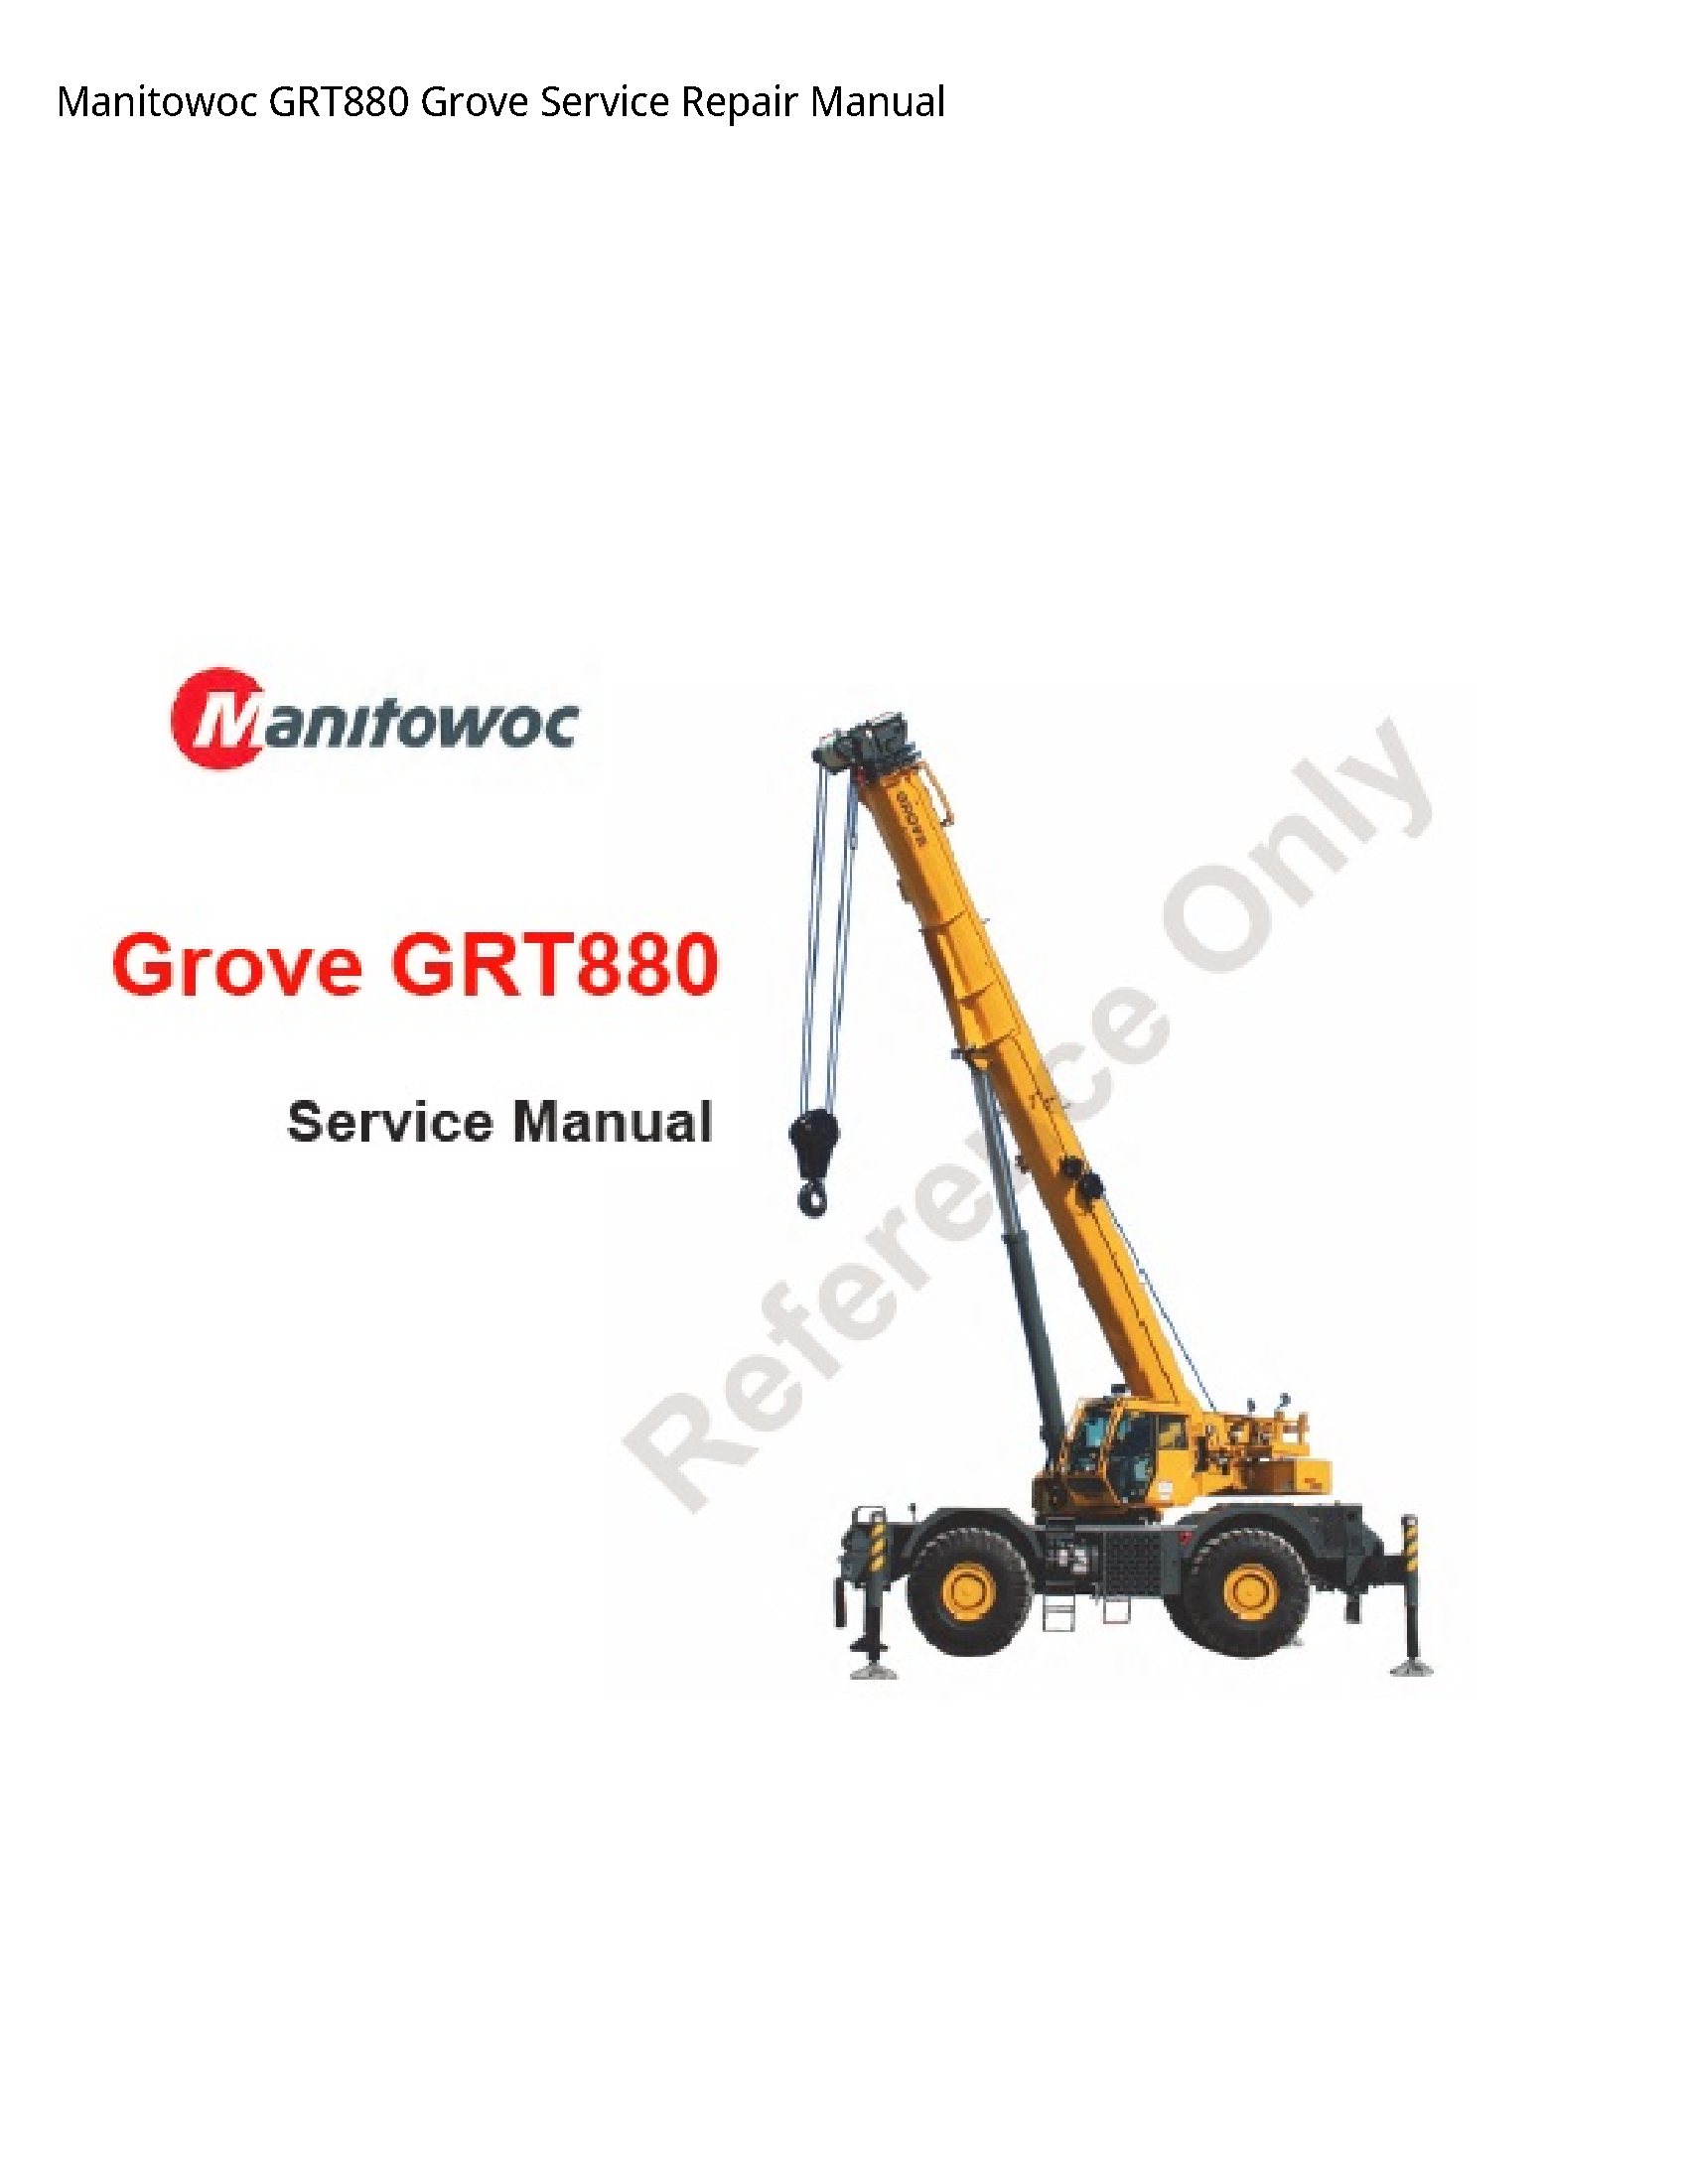 Manitowoc GRT880 Grove manual